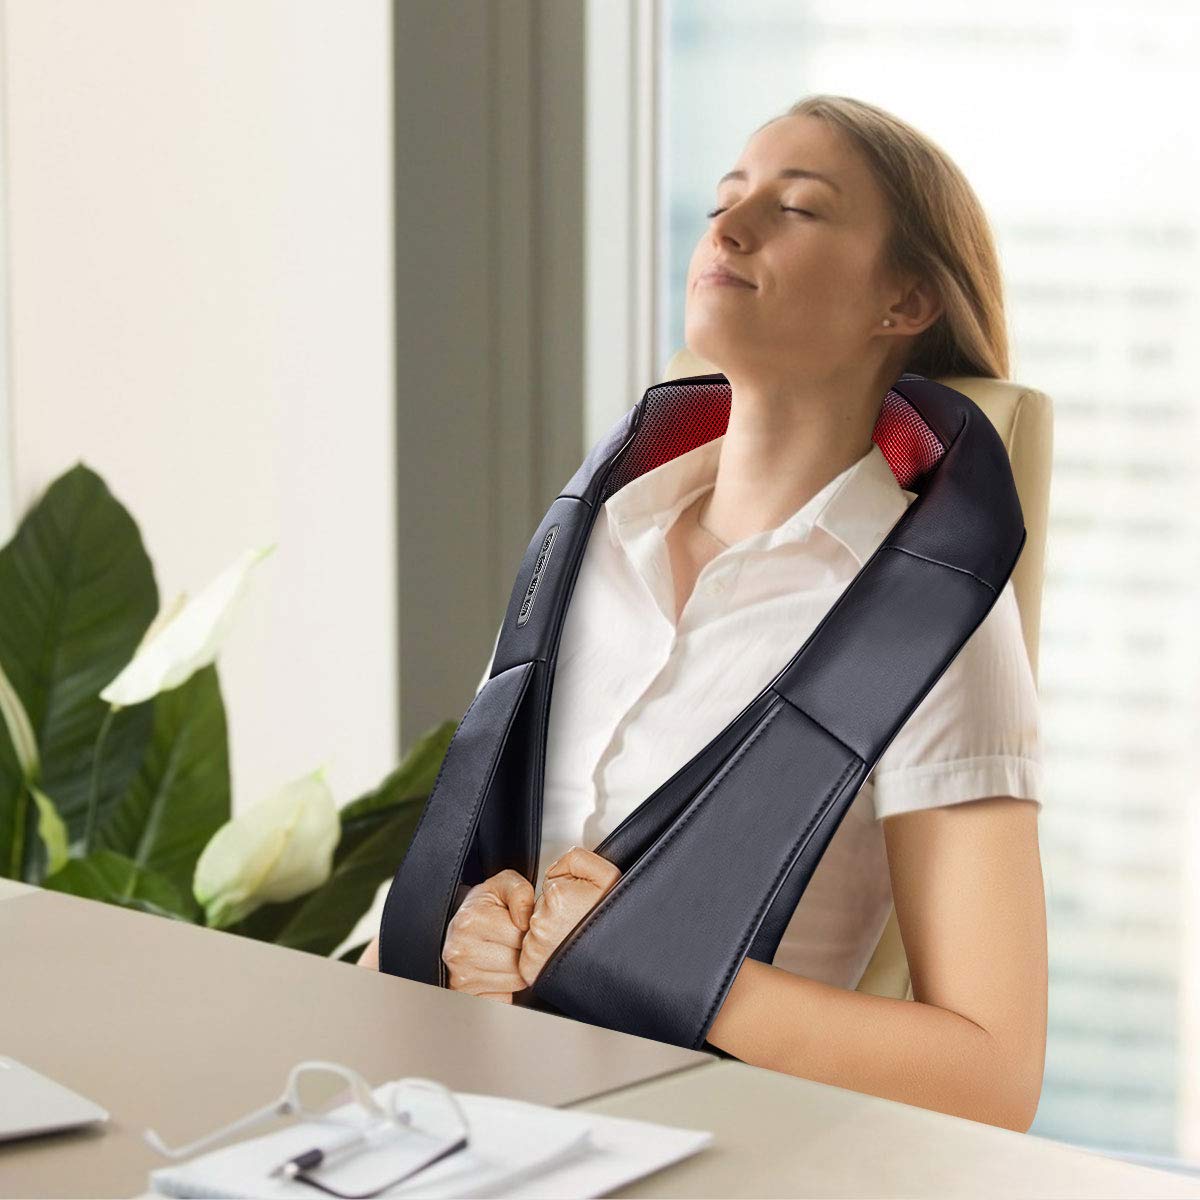 Giantex Shiatsu Neck Back Massager with Heat, Electric 3D Kneading Massage Pillow